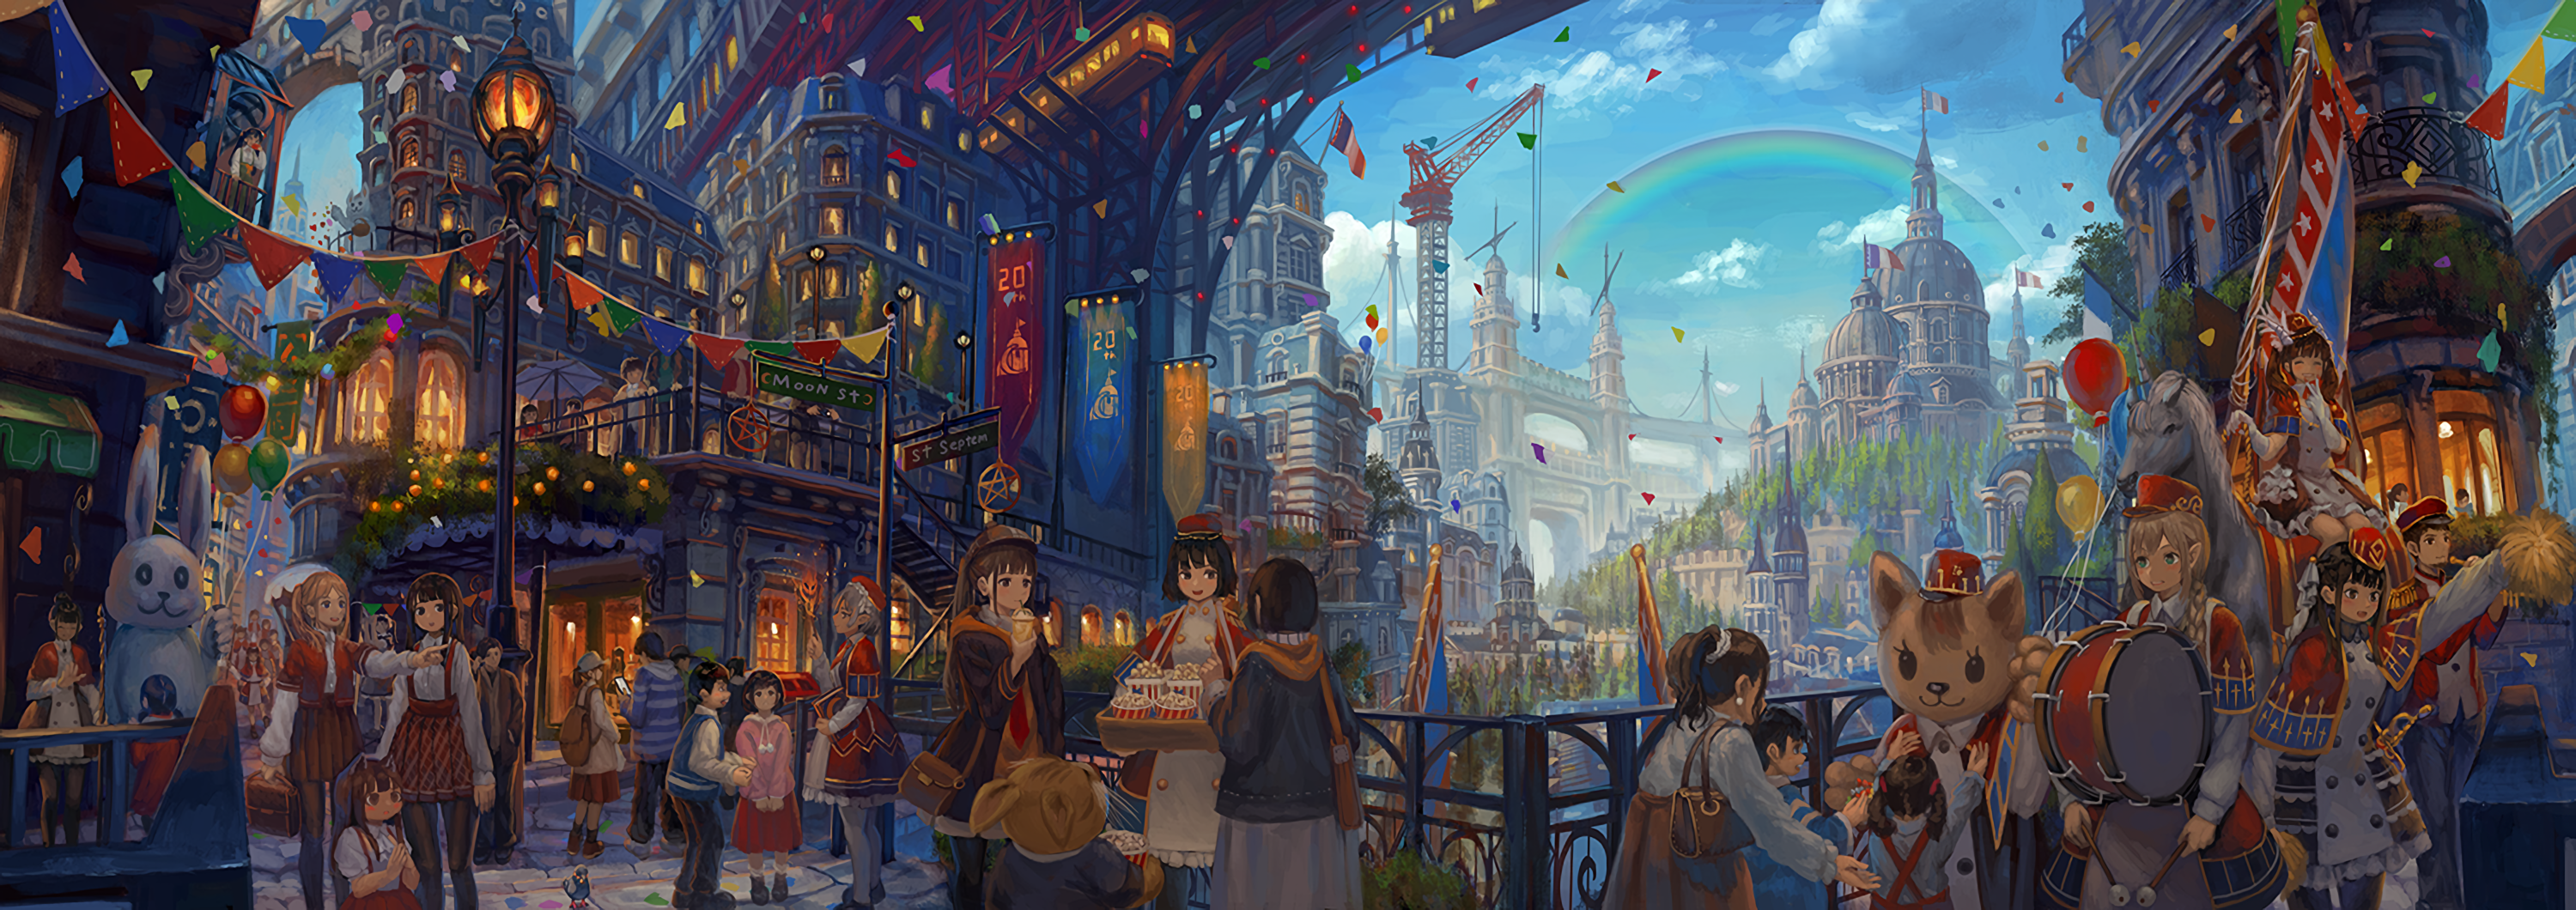 Lantern Festival - Other & Anime Background Wallpapers on Desktop Nexus  (Image 2406783)